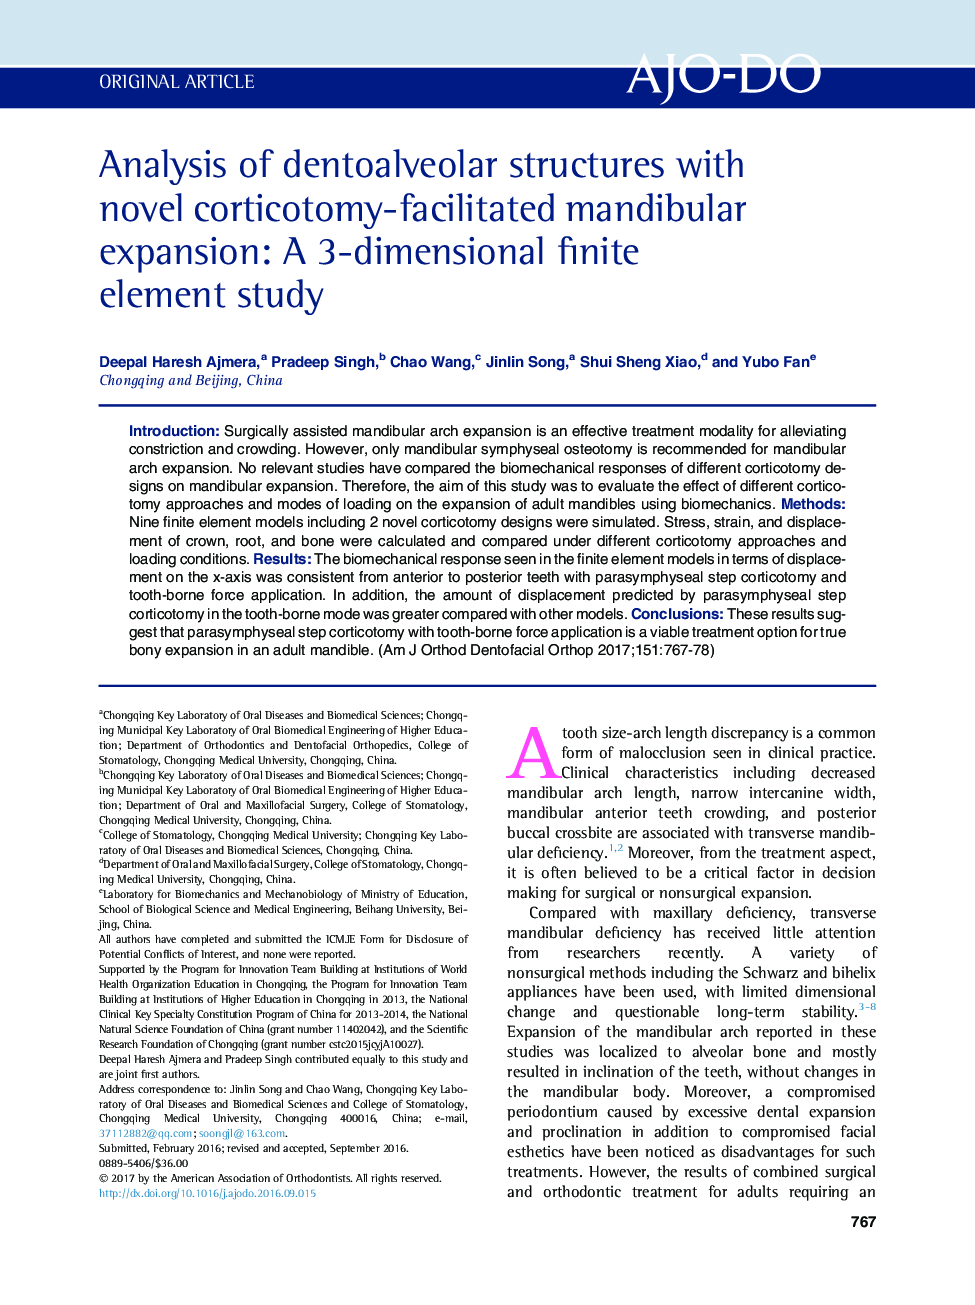 Analysis of dentoalveolar structures with novel corticotomy-facilitated mandibular expansion: A 3-dimensional finite element study